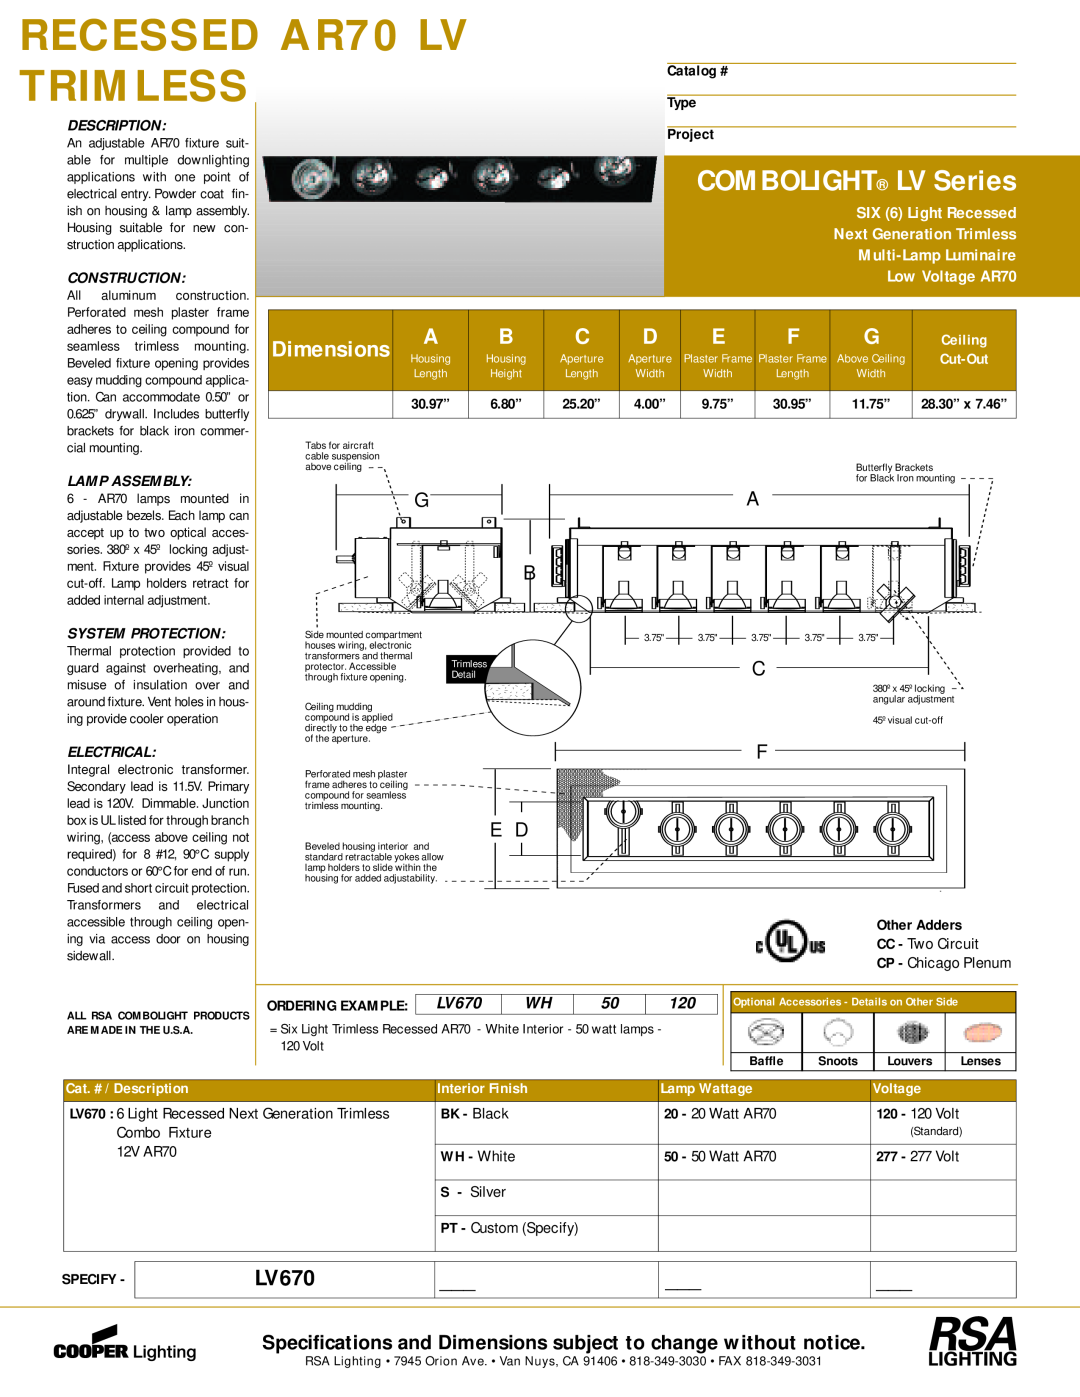 Cooper Lighting dimensions RECESSED AR70 LV, Trimless, COMBOLIGHT LV Series, Dimensions, LV670, SIX 6 Light Recessed 